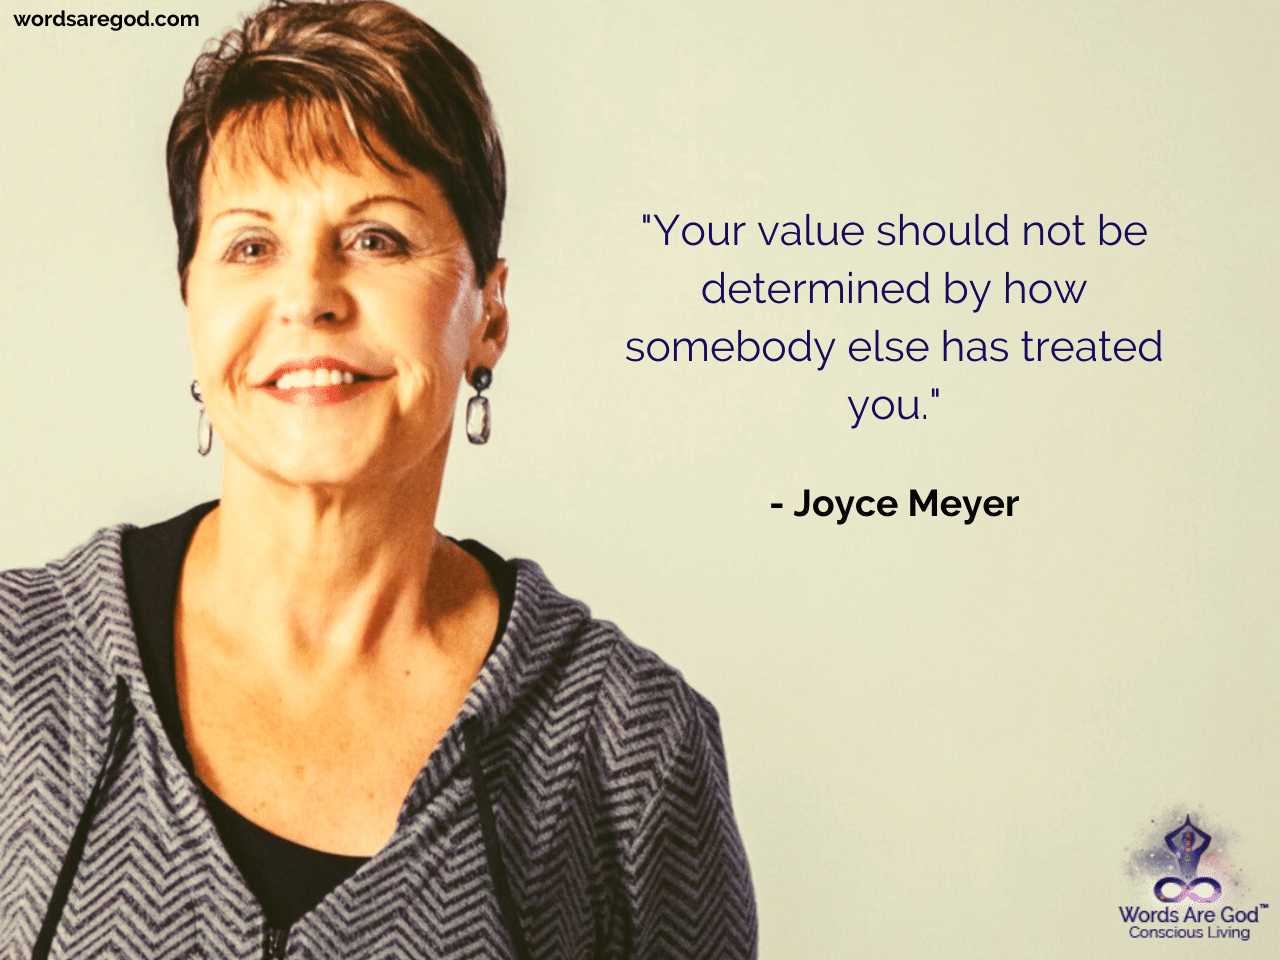 Joyce Meyer Best Quote